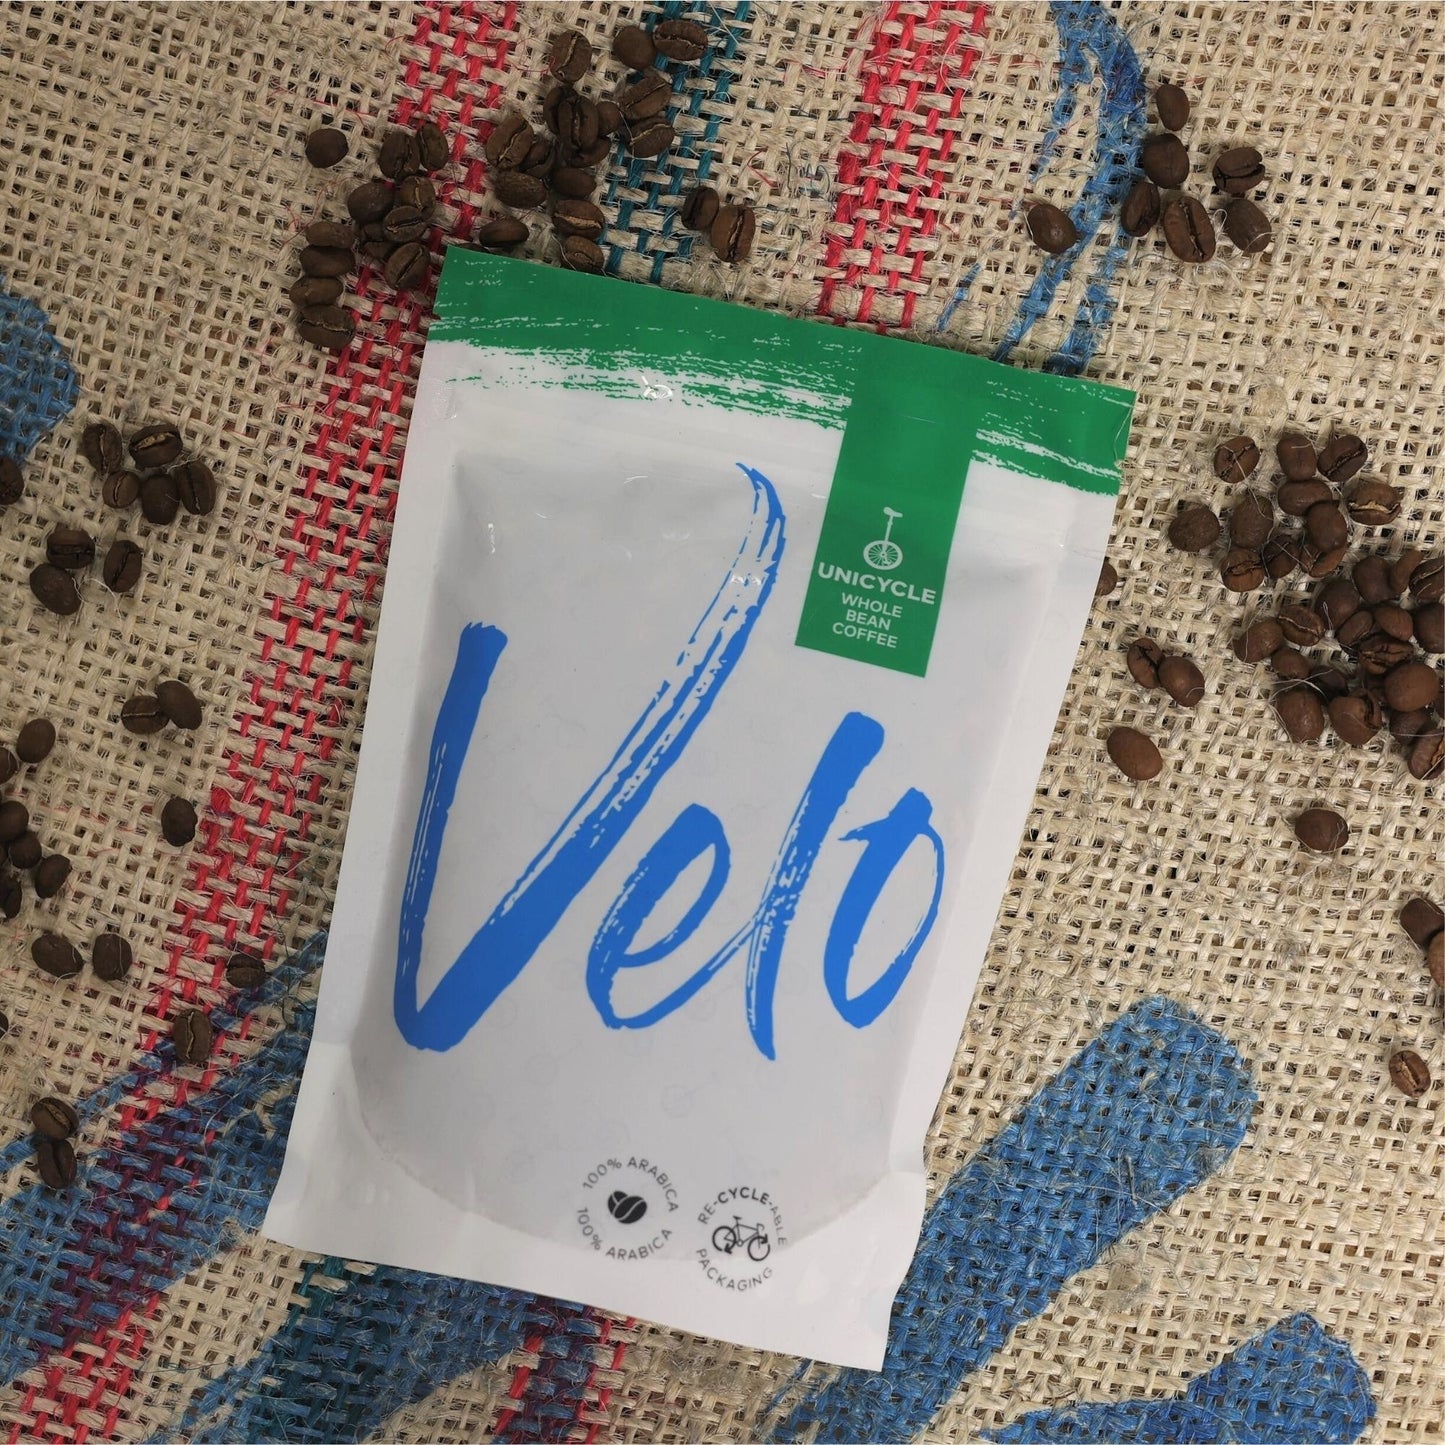 Ratnagiri Shade Dried Micro-lot 200g Coffee Bag India - Velo Coffee Roasters